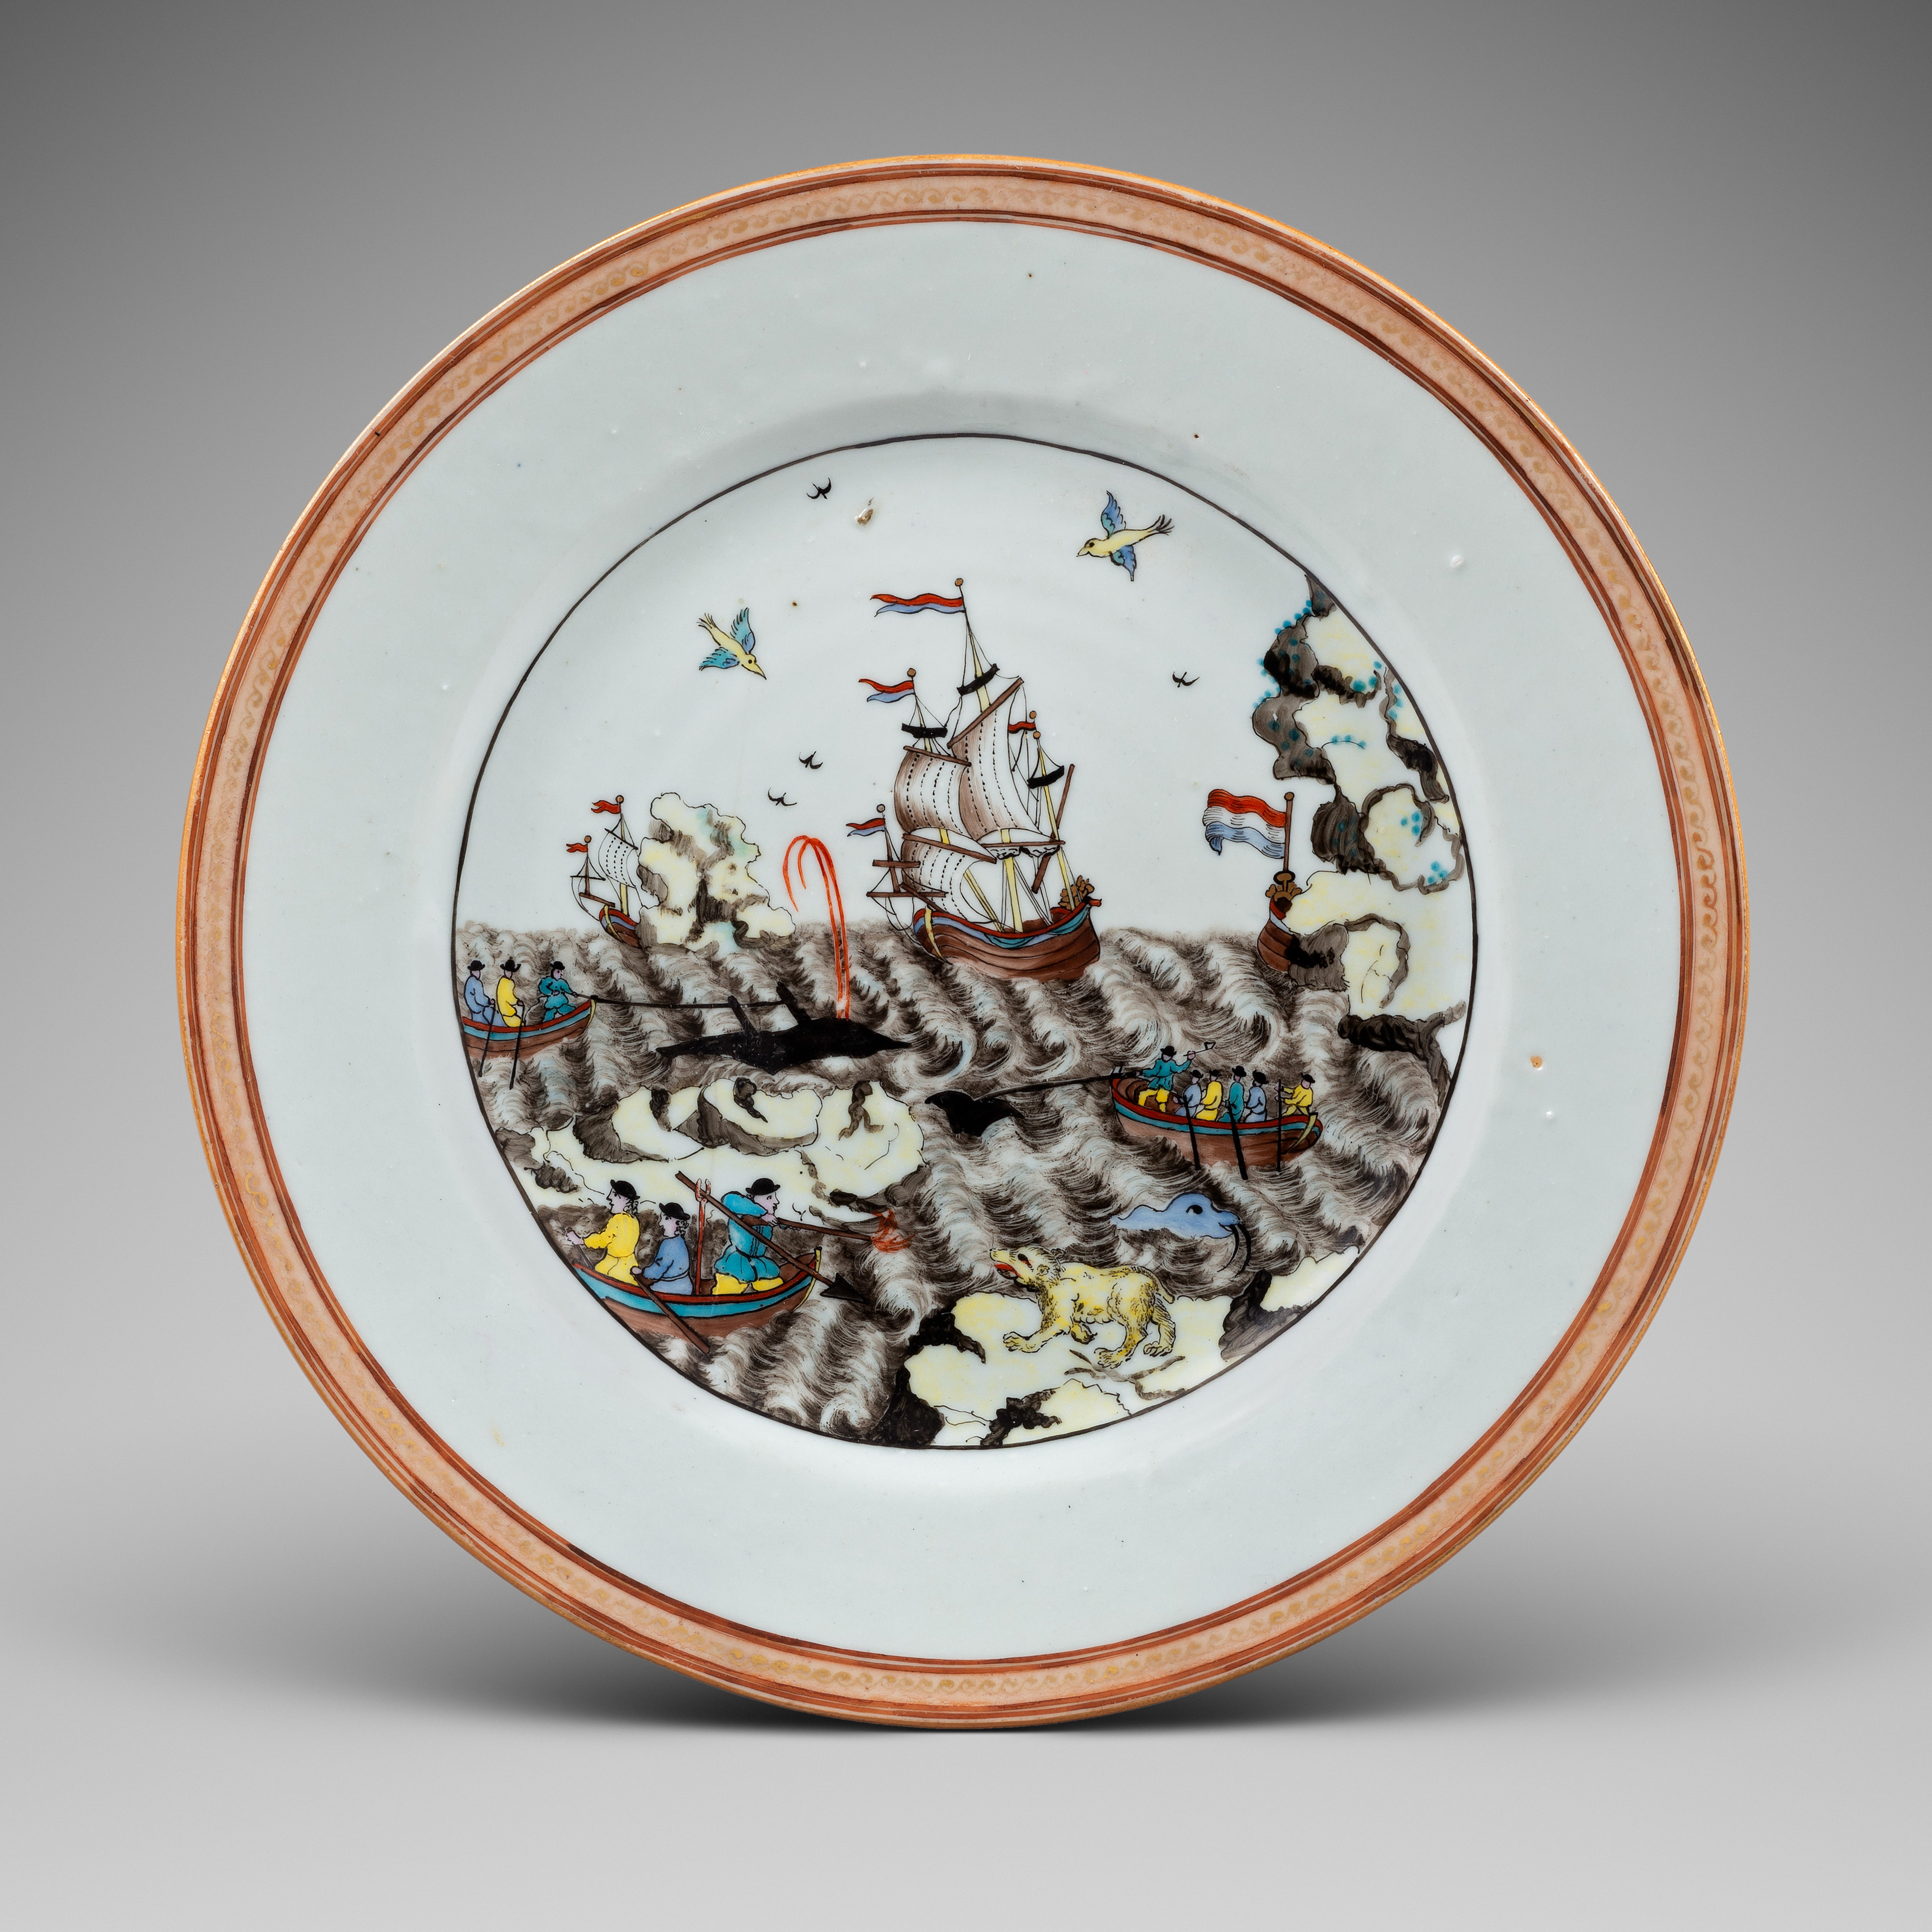 Porcelaine Qianlong (1735-1795), ca. 1730/1750, Chine